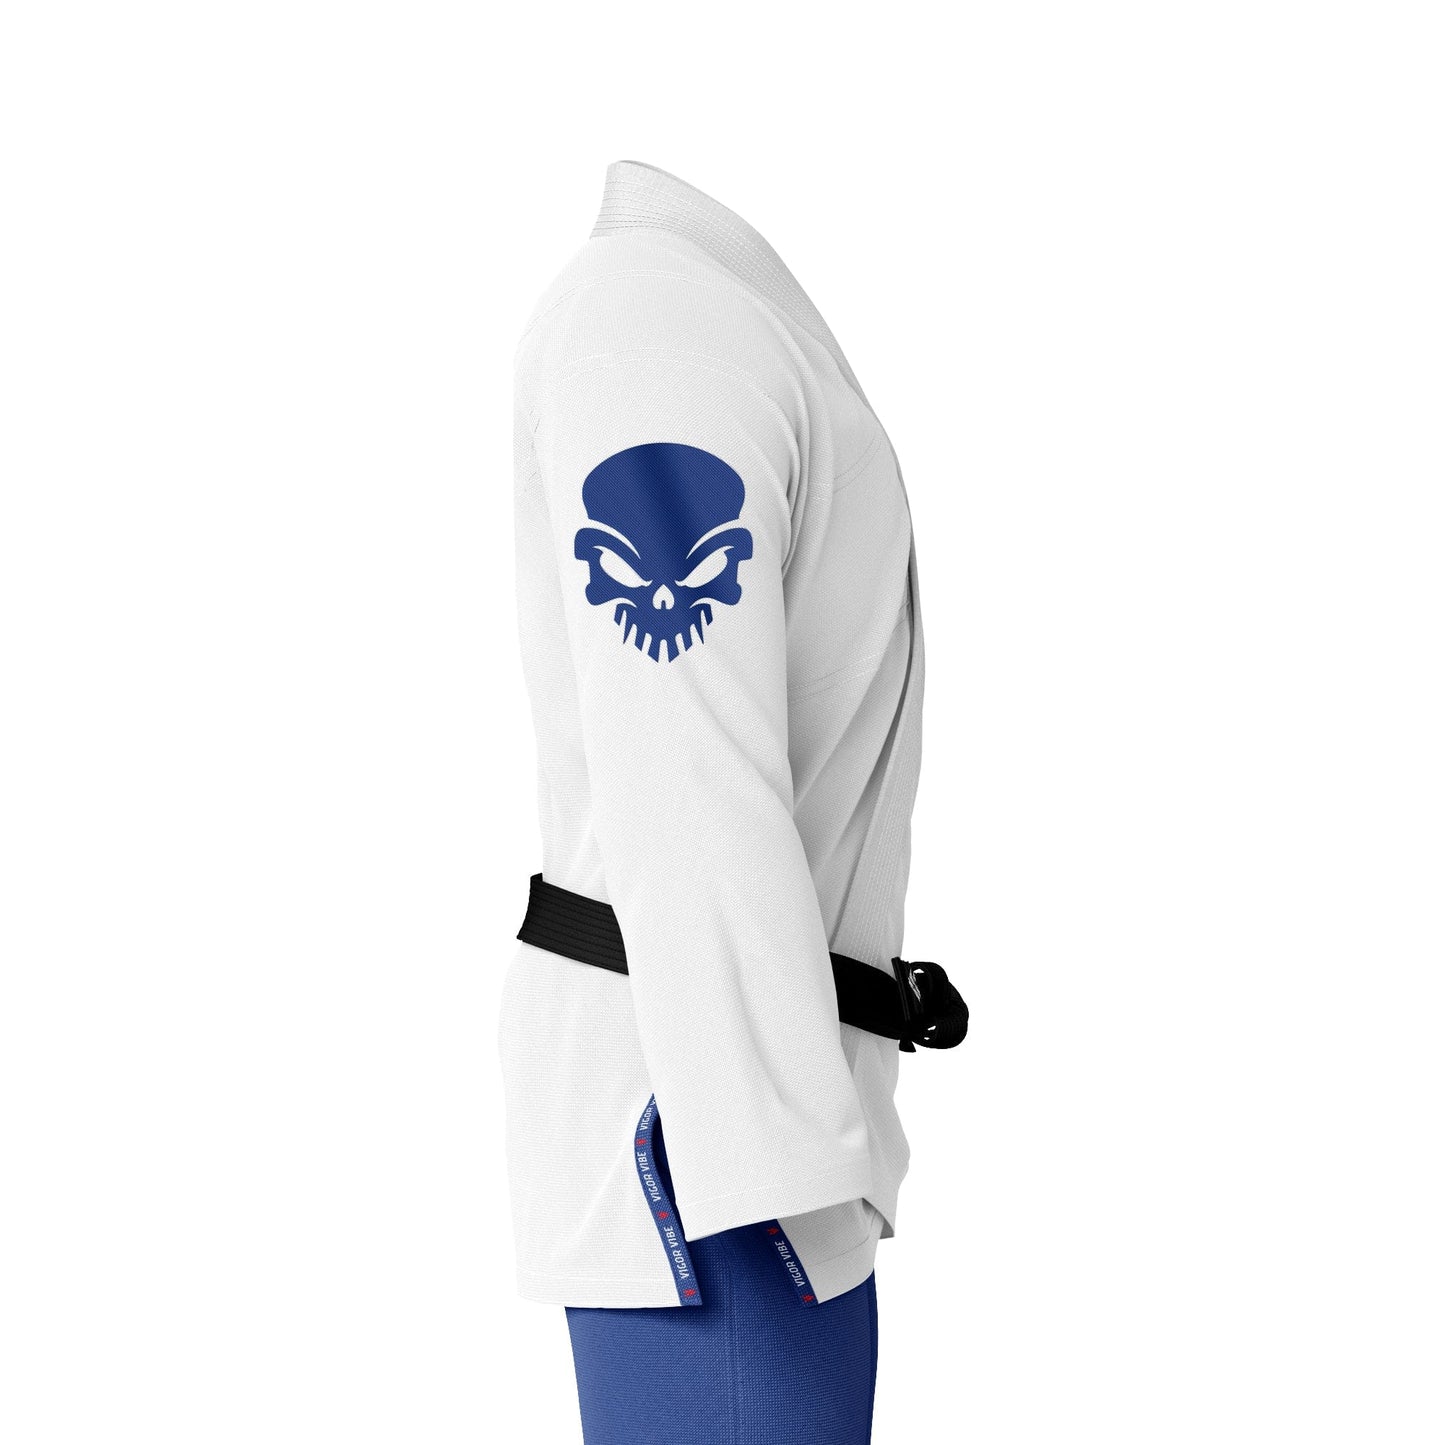 Skull Warrior Brasilianischer Jiu-Jitsu-Gi in Blau und Weiß